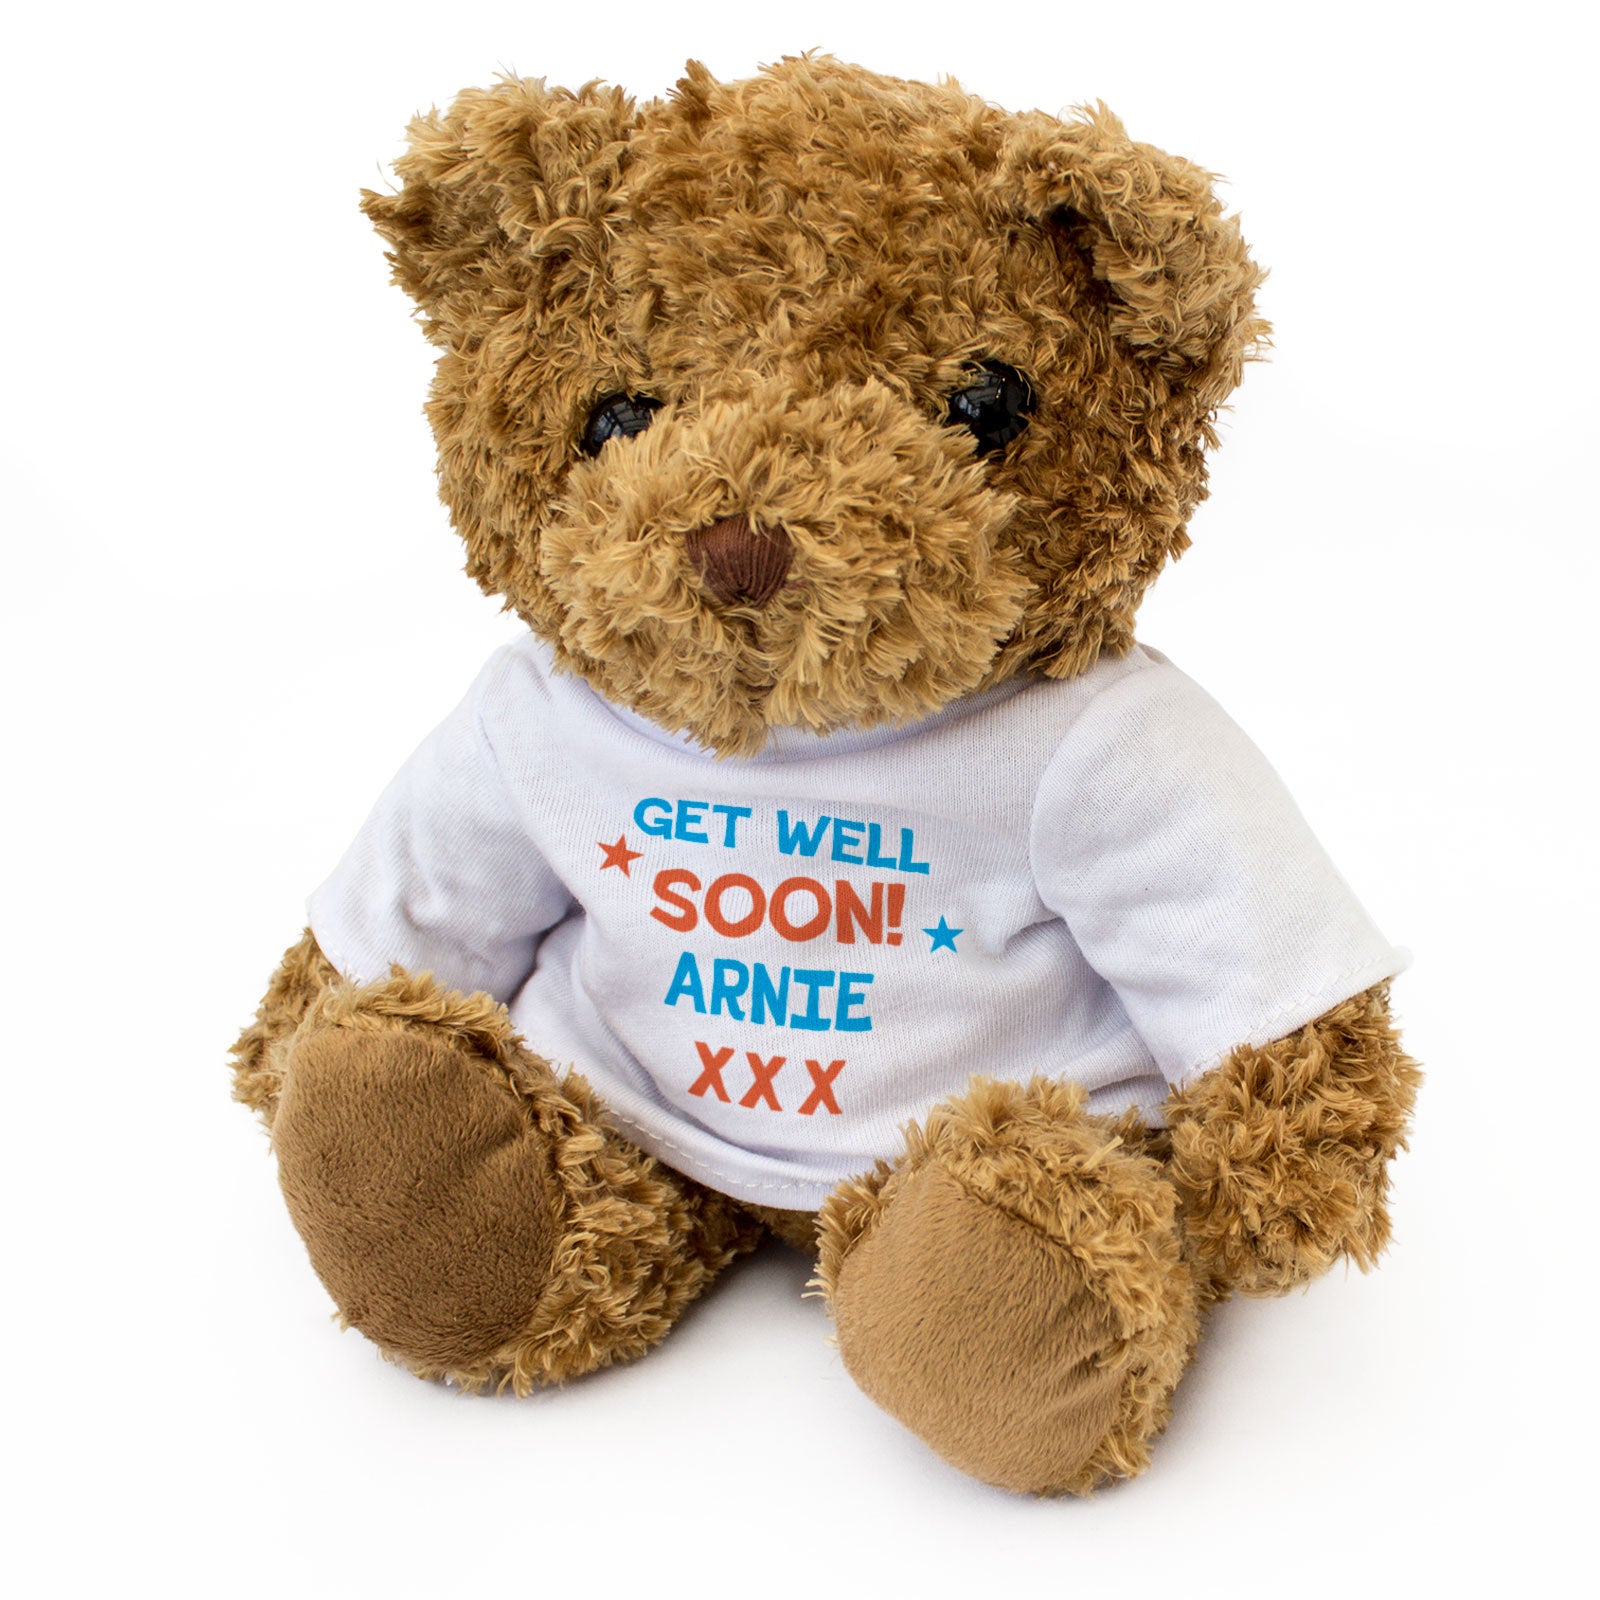 Get Well Soon Arnie - Teddy Bear